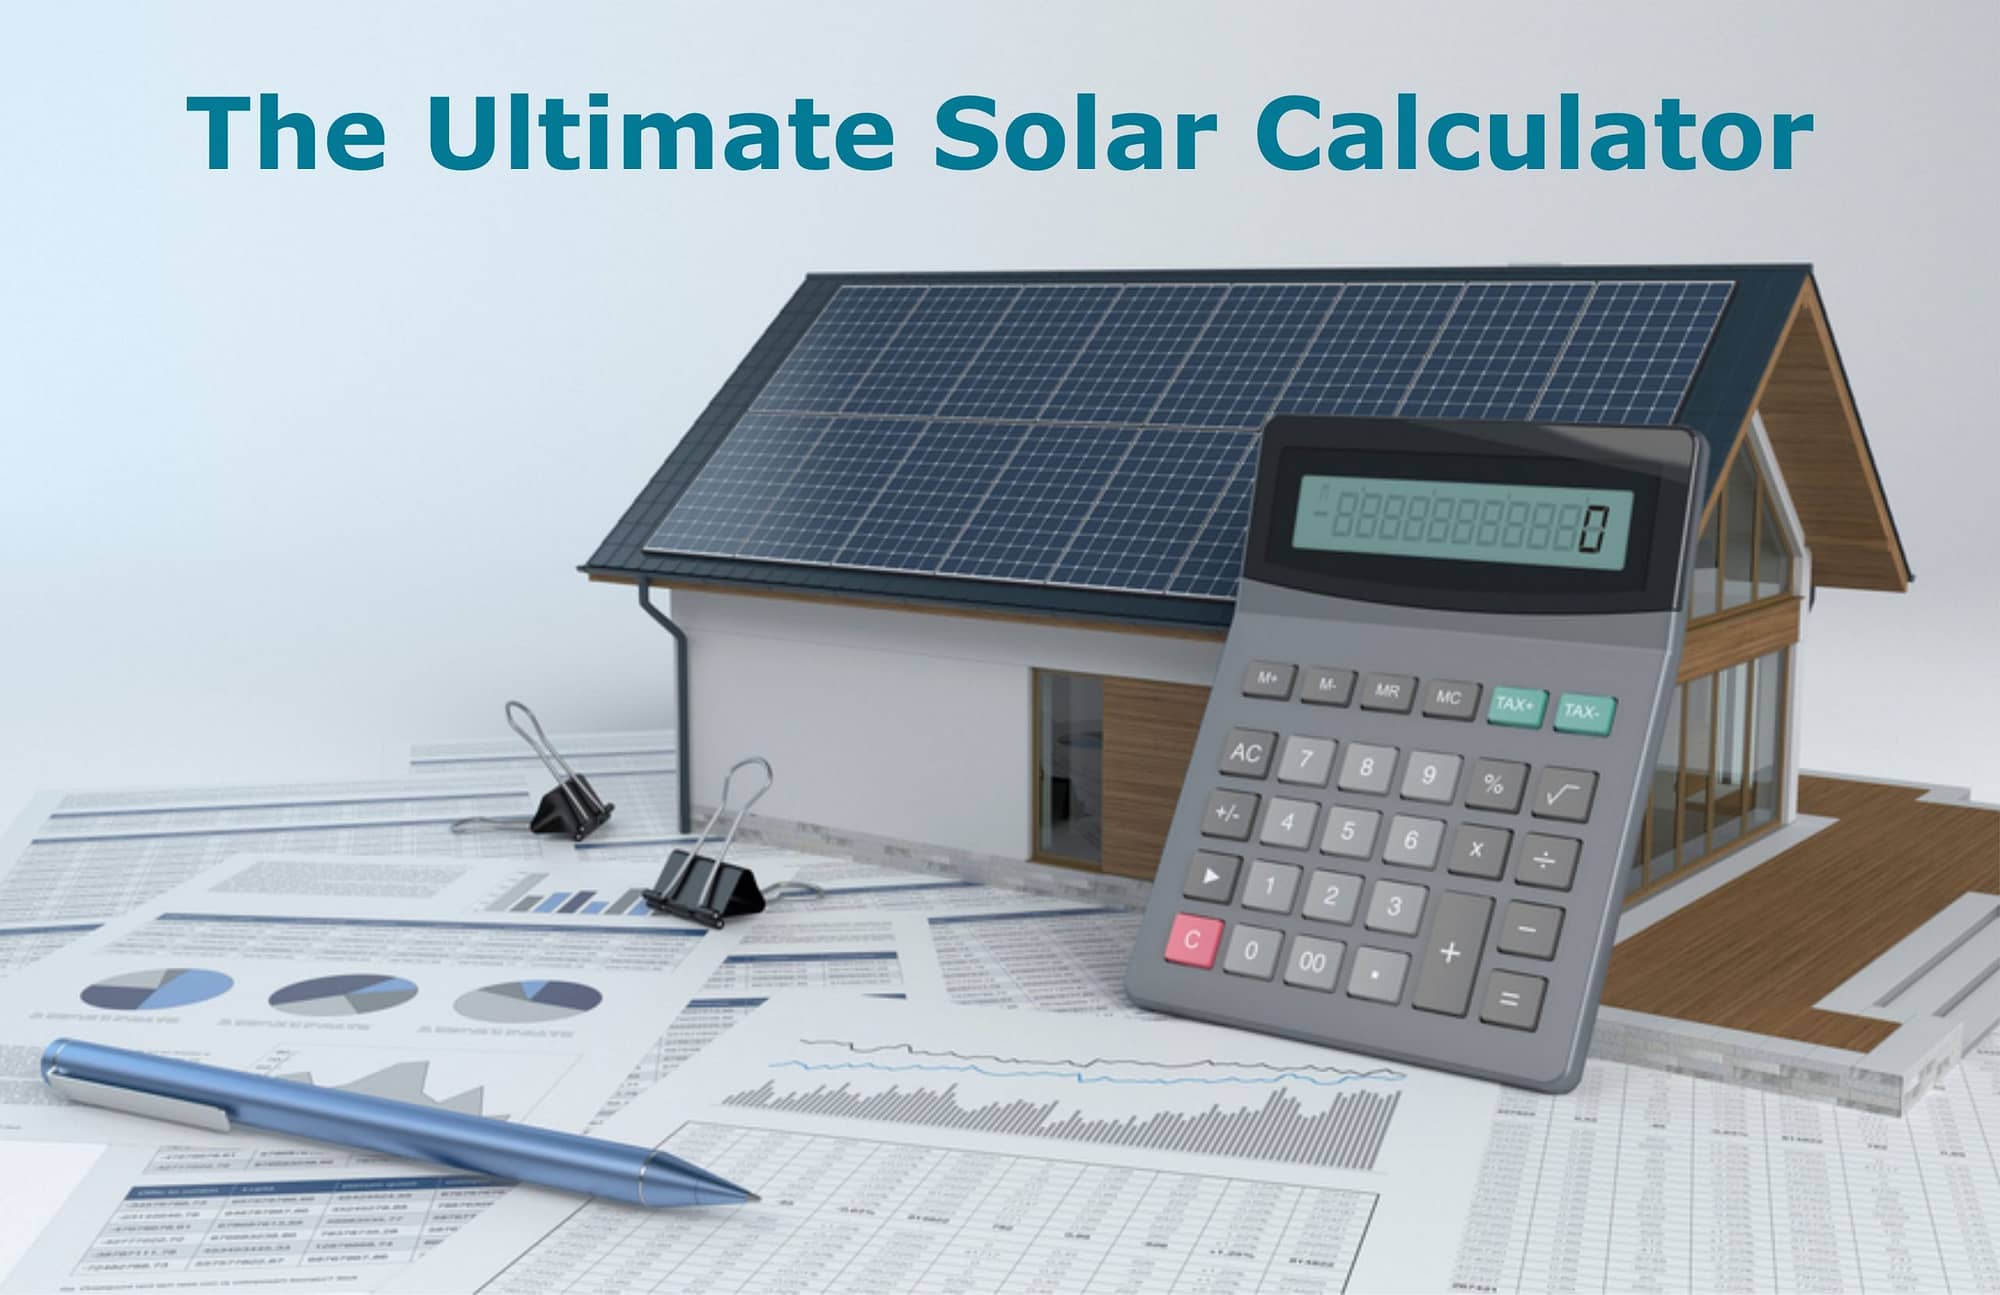 The Ultimate Solar Calculator